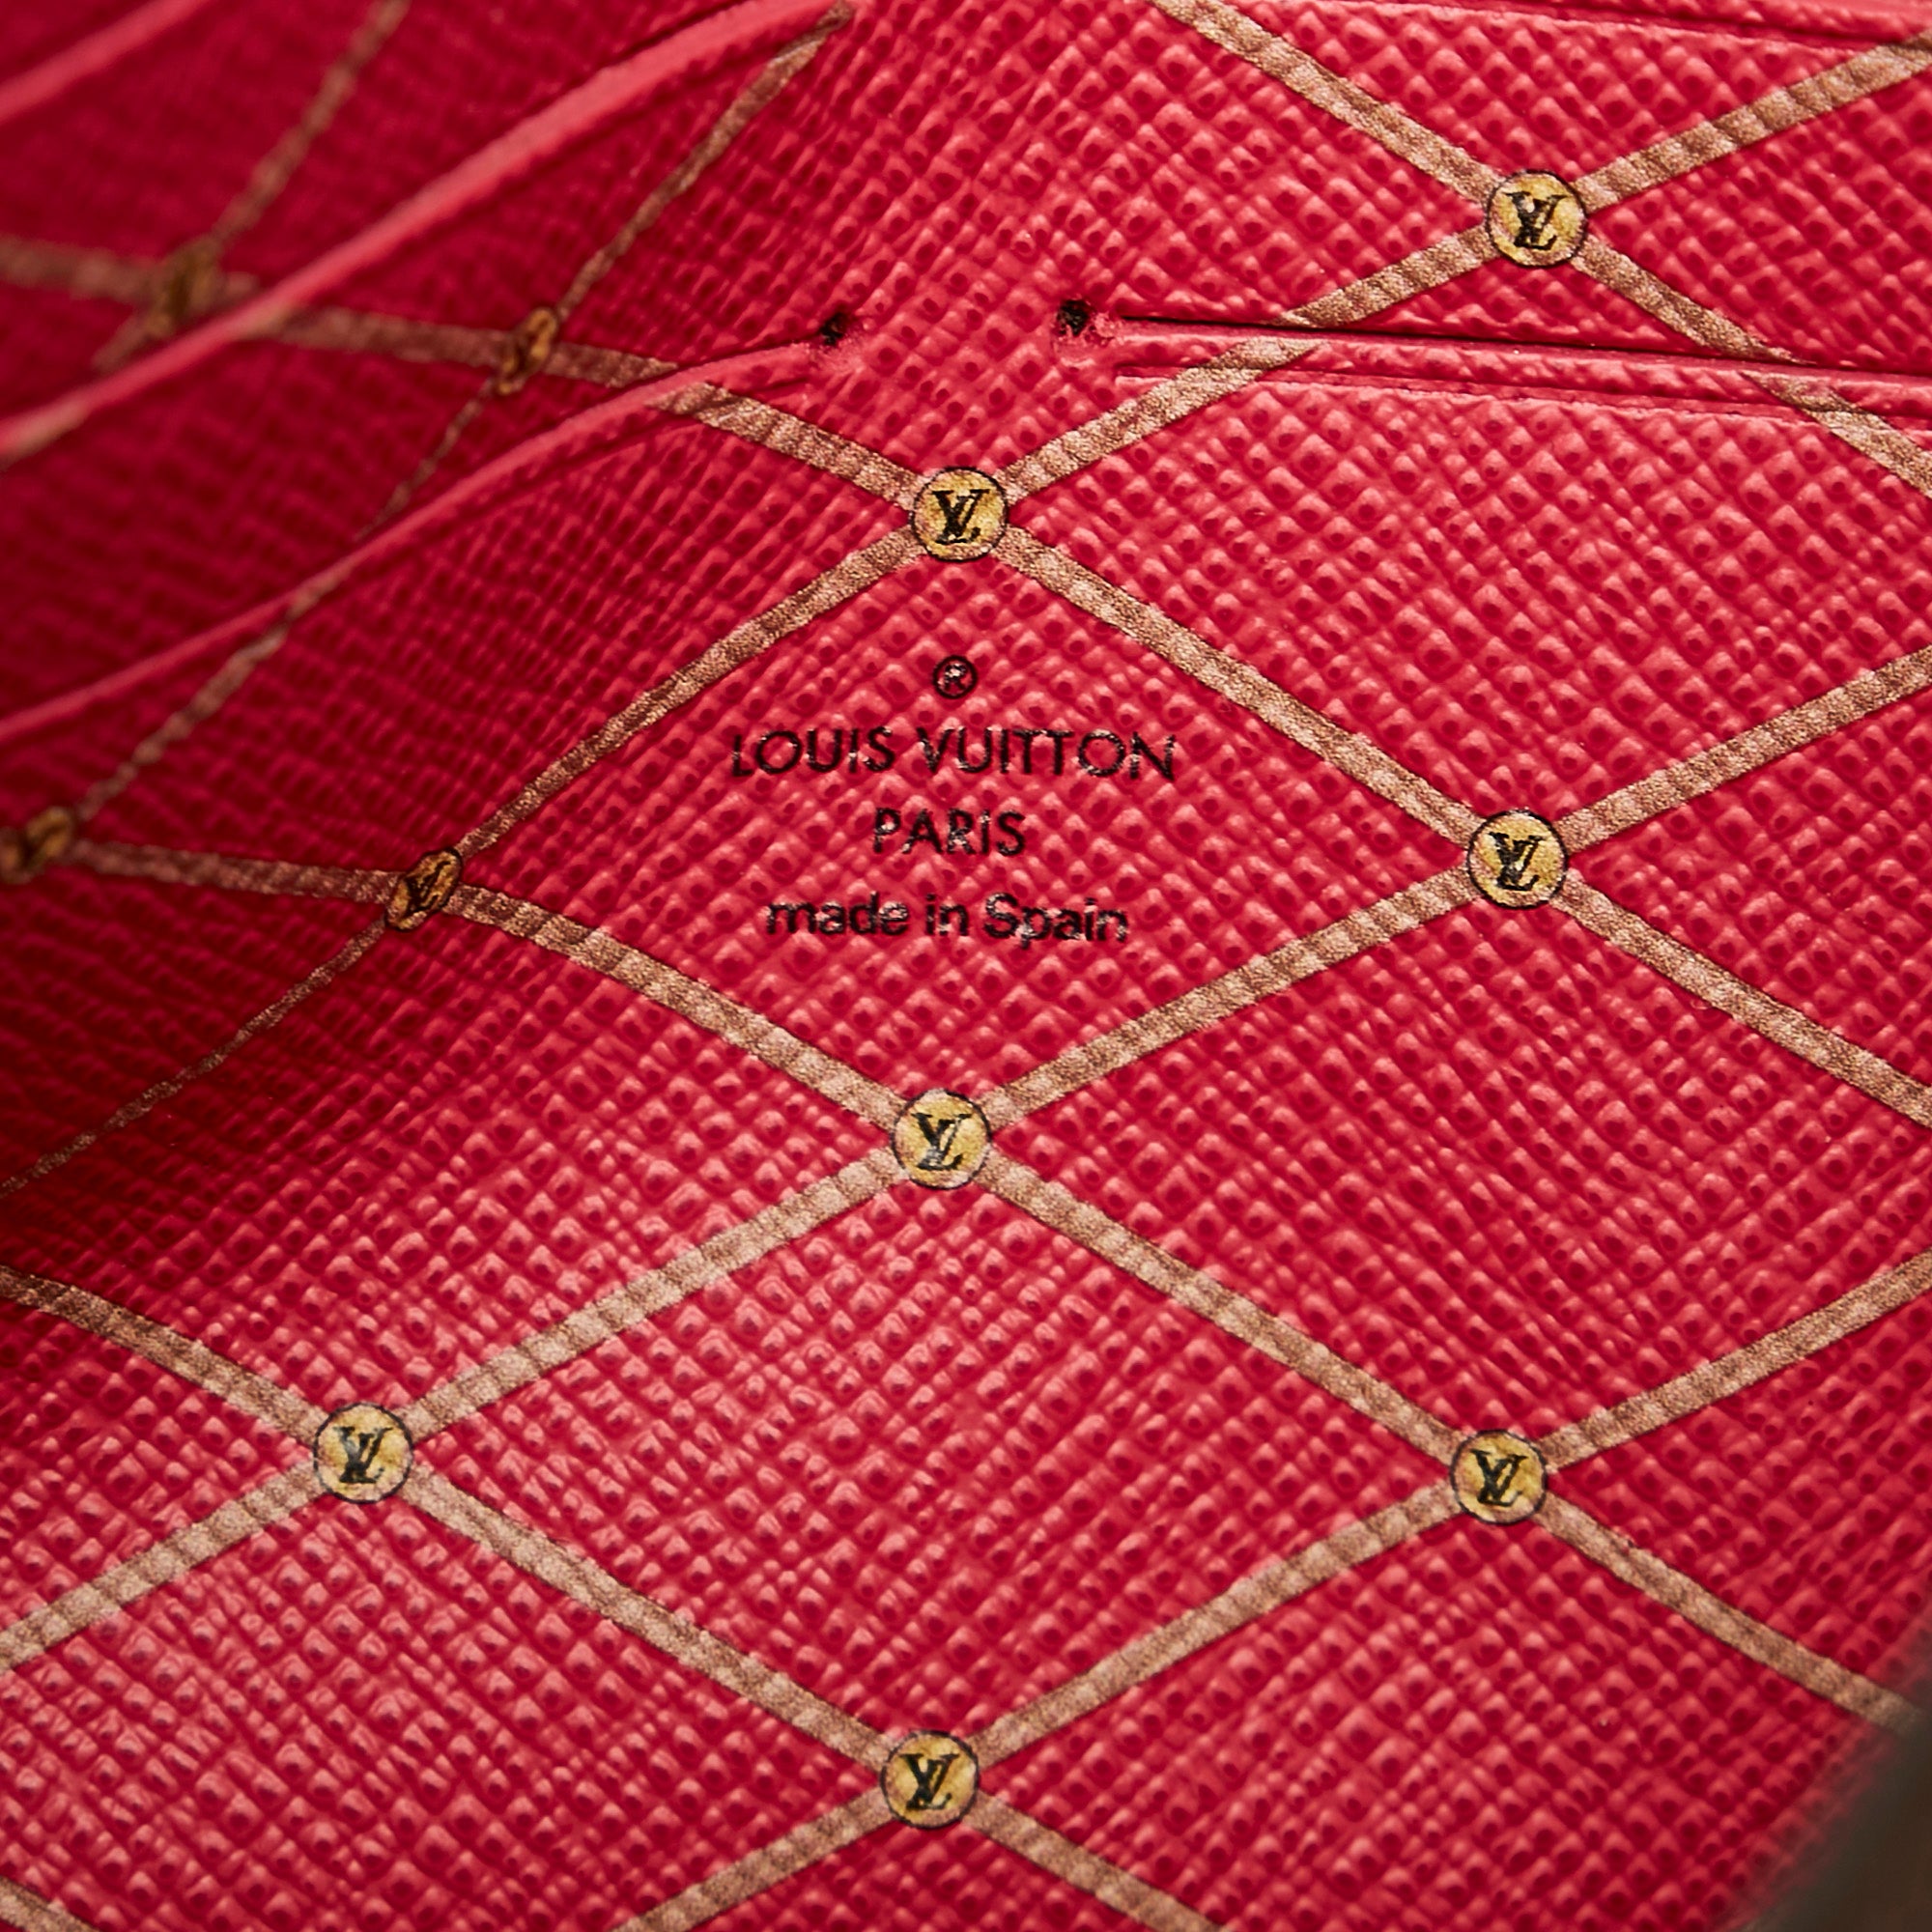 Louis Vuitton Limited Edition Monogram Canvas Summer Trunks Trompe